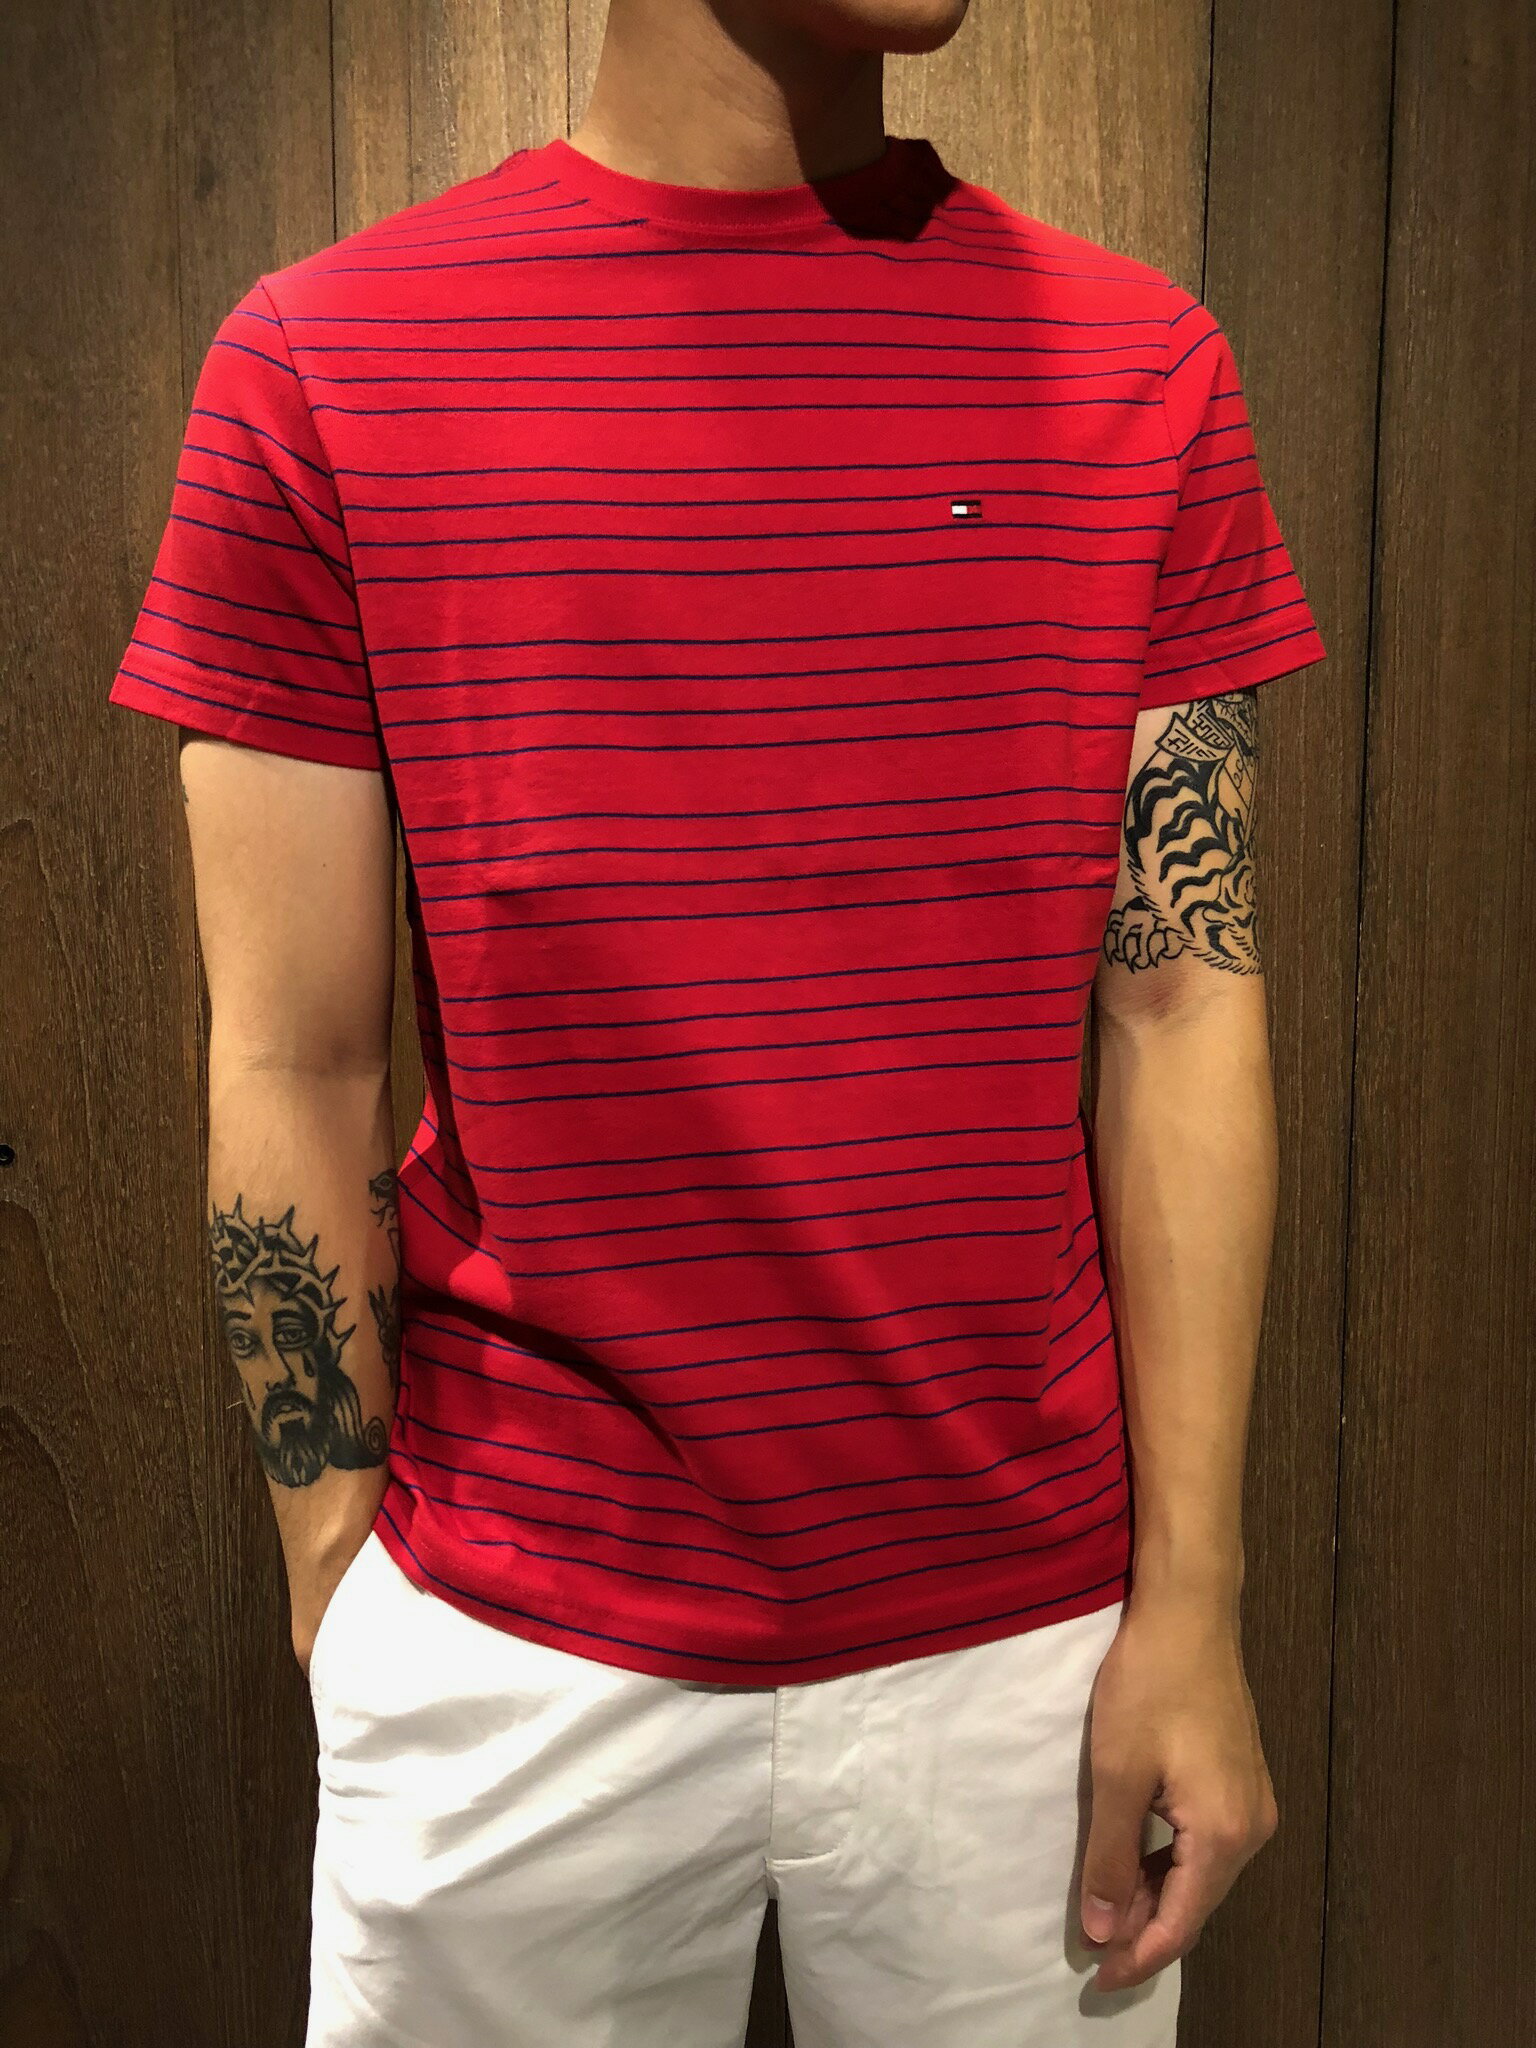 美國百分百【全新珍品】 Tommy Hilfiger T恤TH 男衣短袖T-shirt 條紋